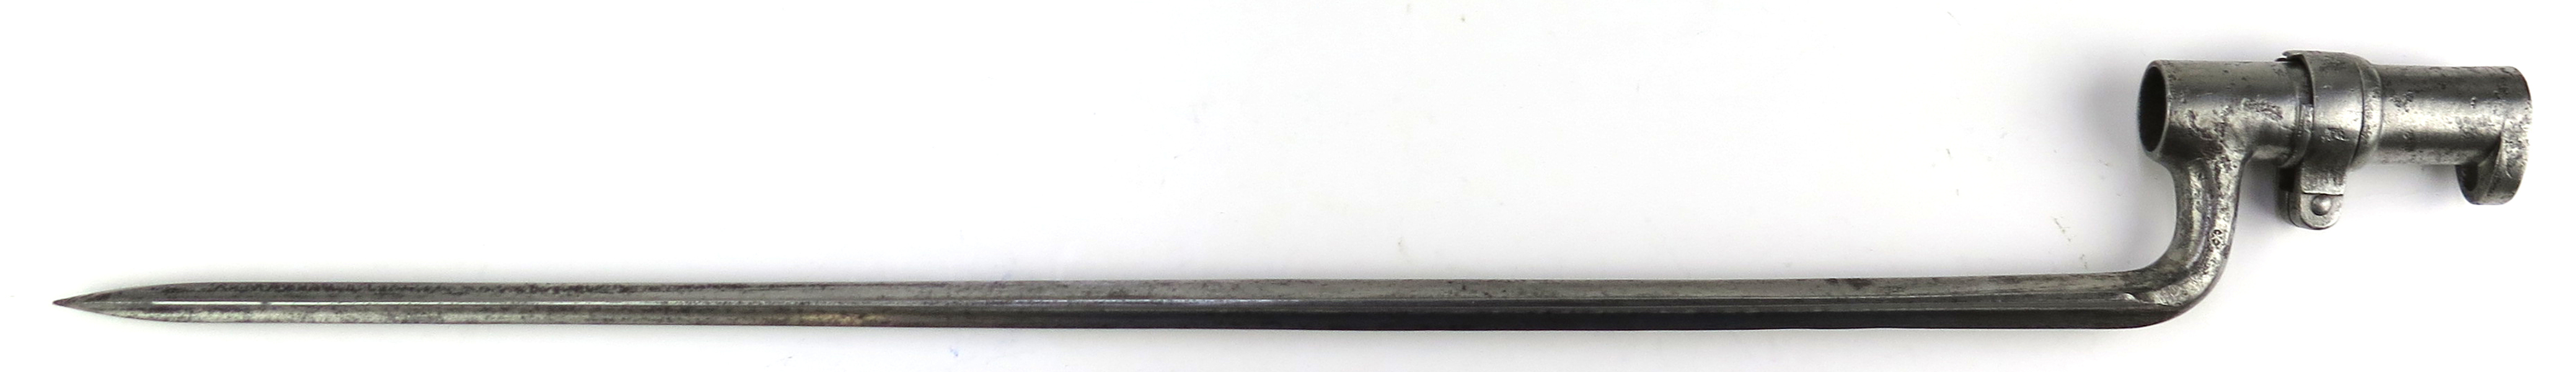 Hylsbajonett, stål, Österrikisk M/1854 för Lorenzmusköt M/1854, _20143a_lg.jpeg